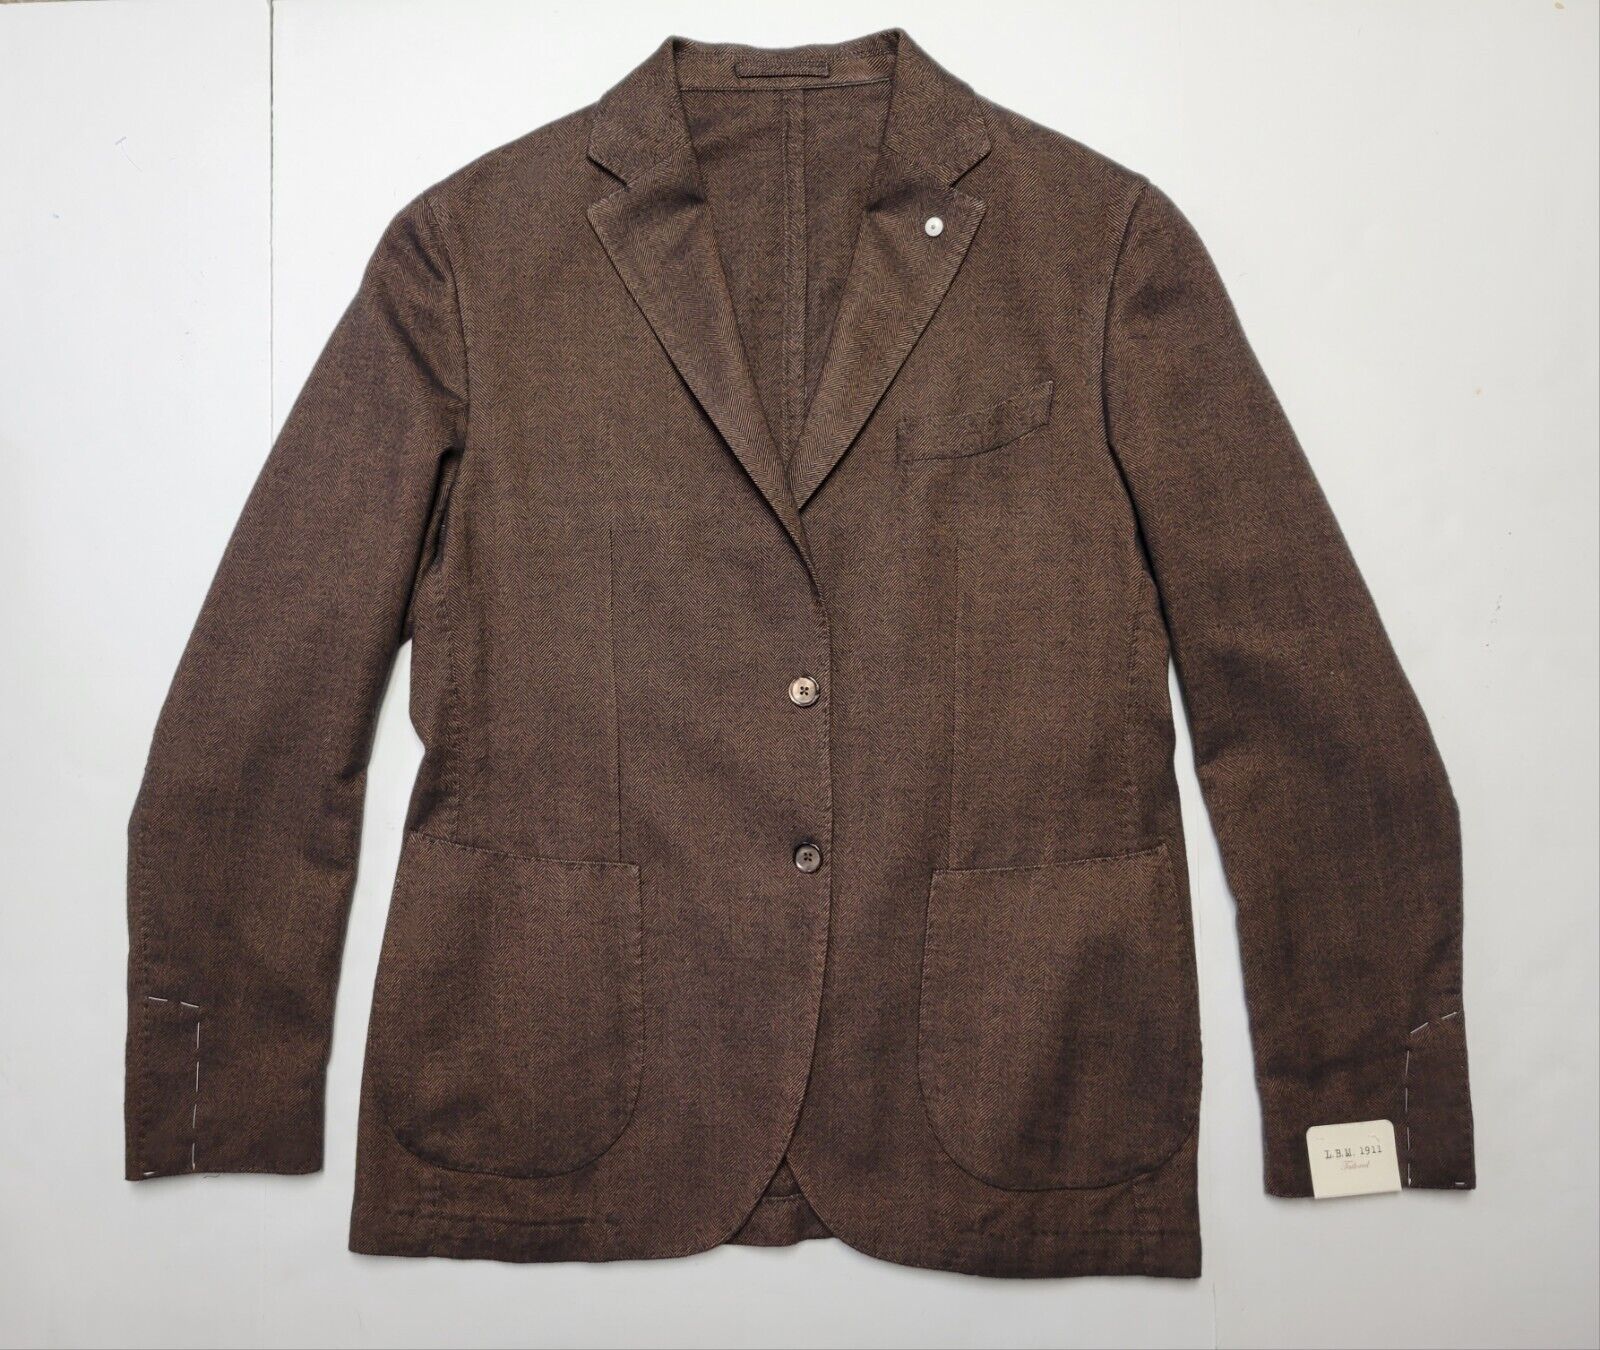 L.B.M. Men\'s Blazer 42L Brown Herringbone Cotton DANDY JACKET Men\'s Sport Coat